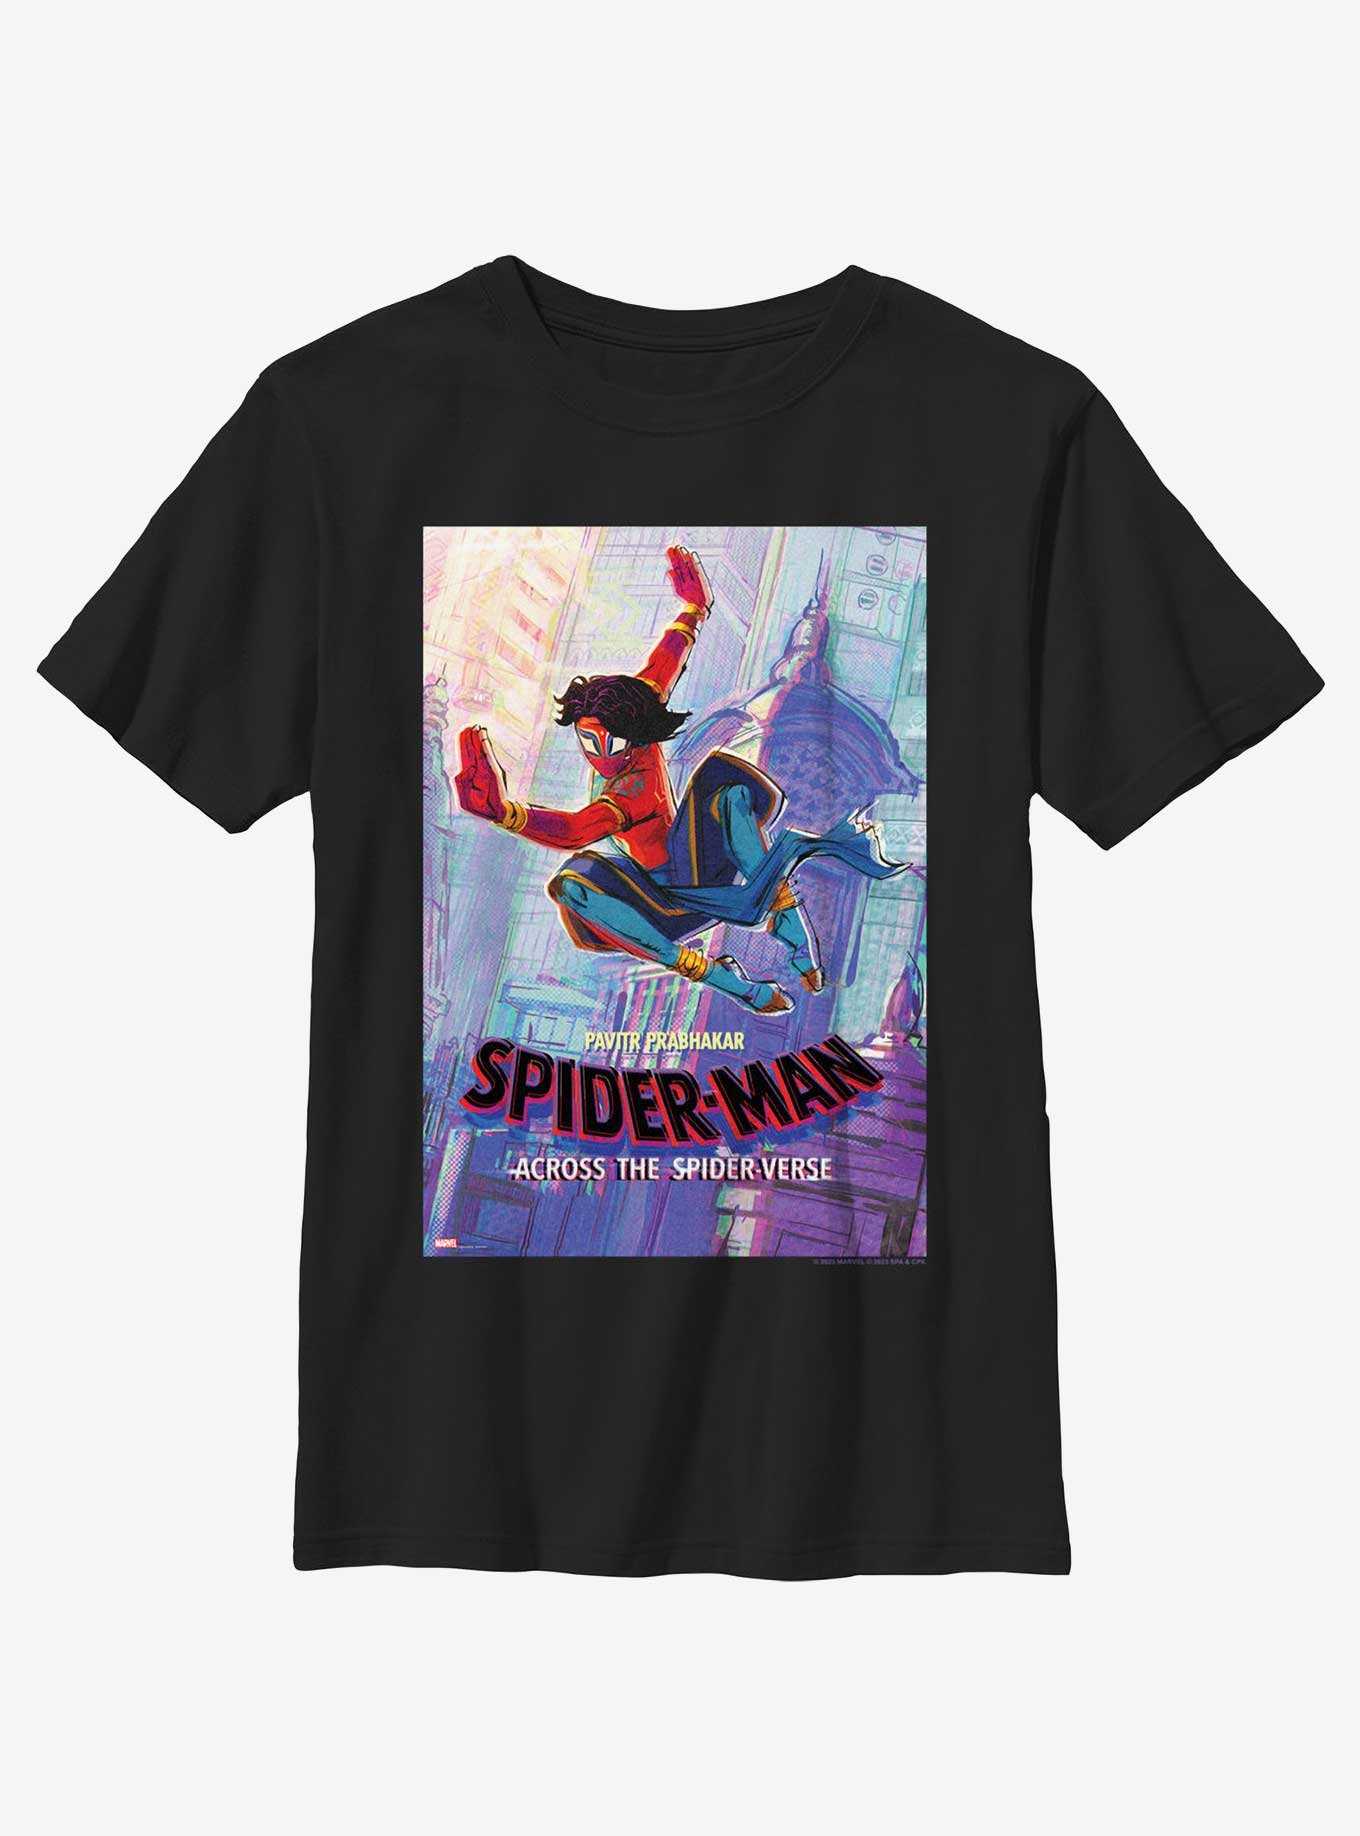 Spider-Man: Across The Spider-Verse Pavitr Prabhakar Poster Youth T-Shirt, , hi-res